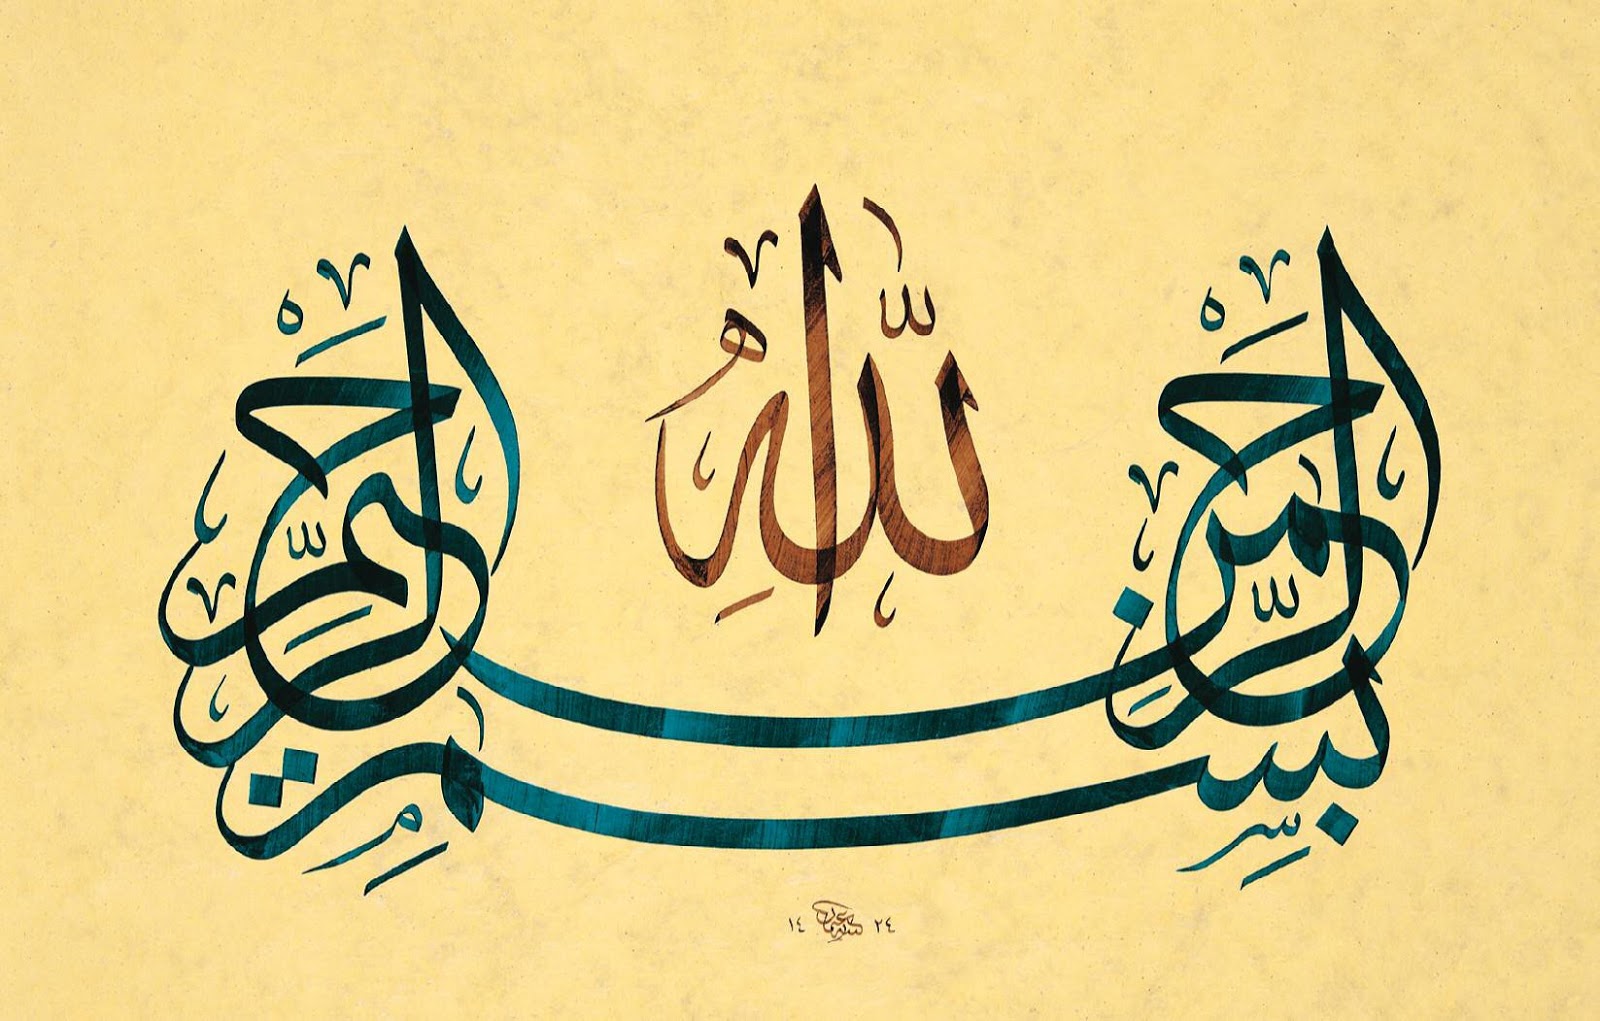 kaligrafi merupakan tulisan indah yang dalam visualisasinya menggunakan tulisan dan huruf